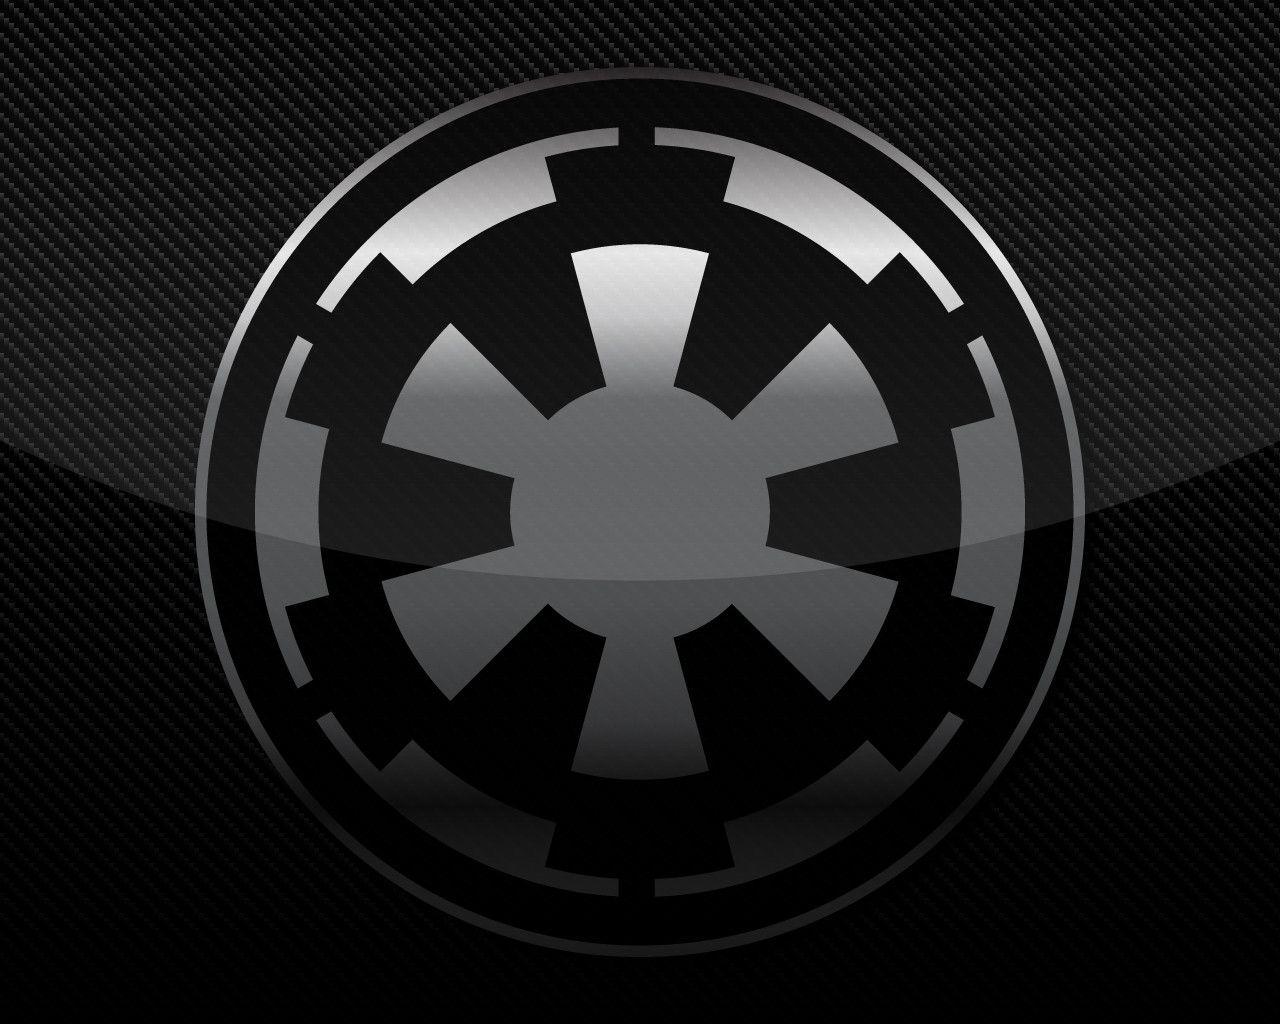 Star Wars Logo Wallpaper 67 images